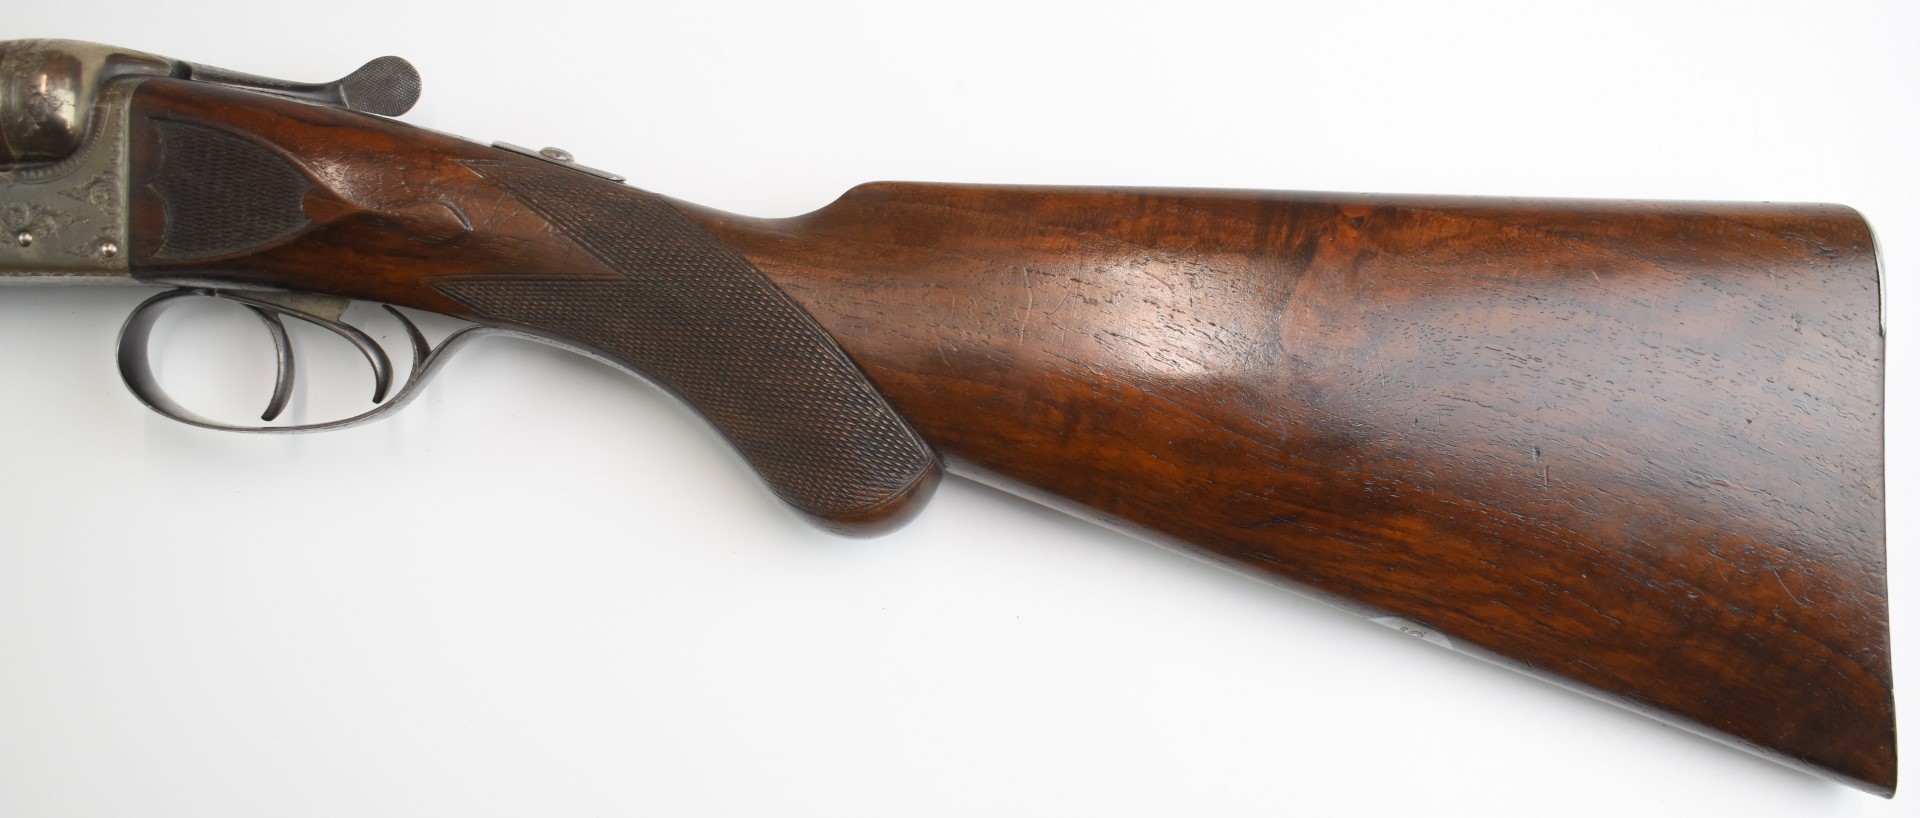 C G Bonehill 12 bore side by side shotgun with engraved locks, underside, trigger guard, top - Image 17 of 30